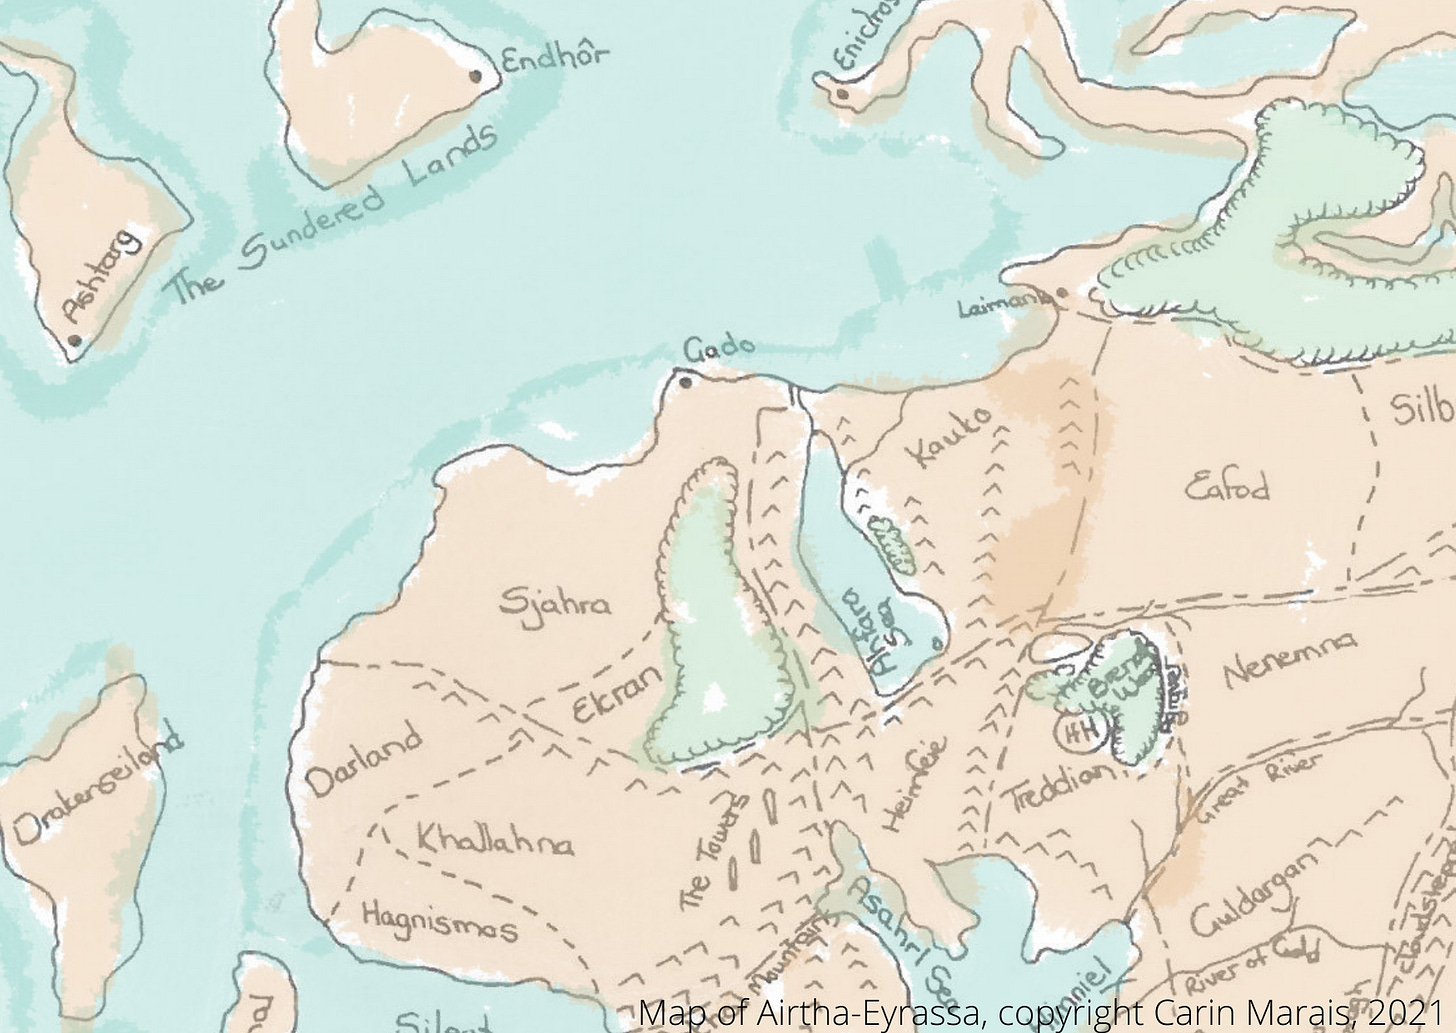 Map of part of Airtha-Eyrassa